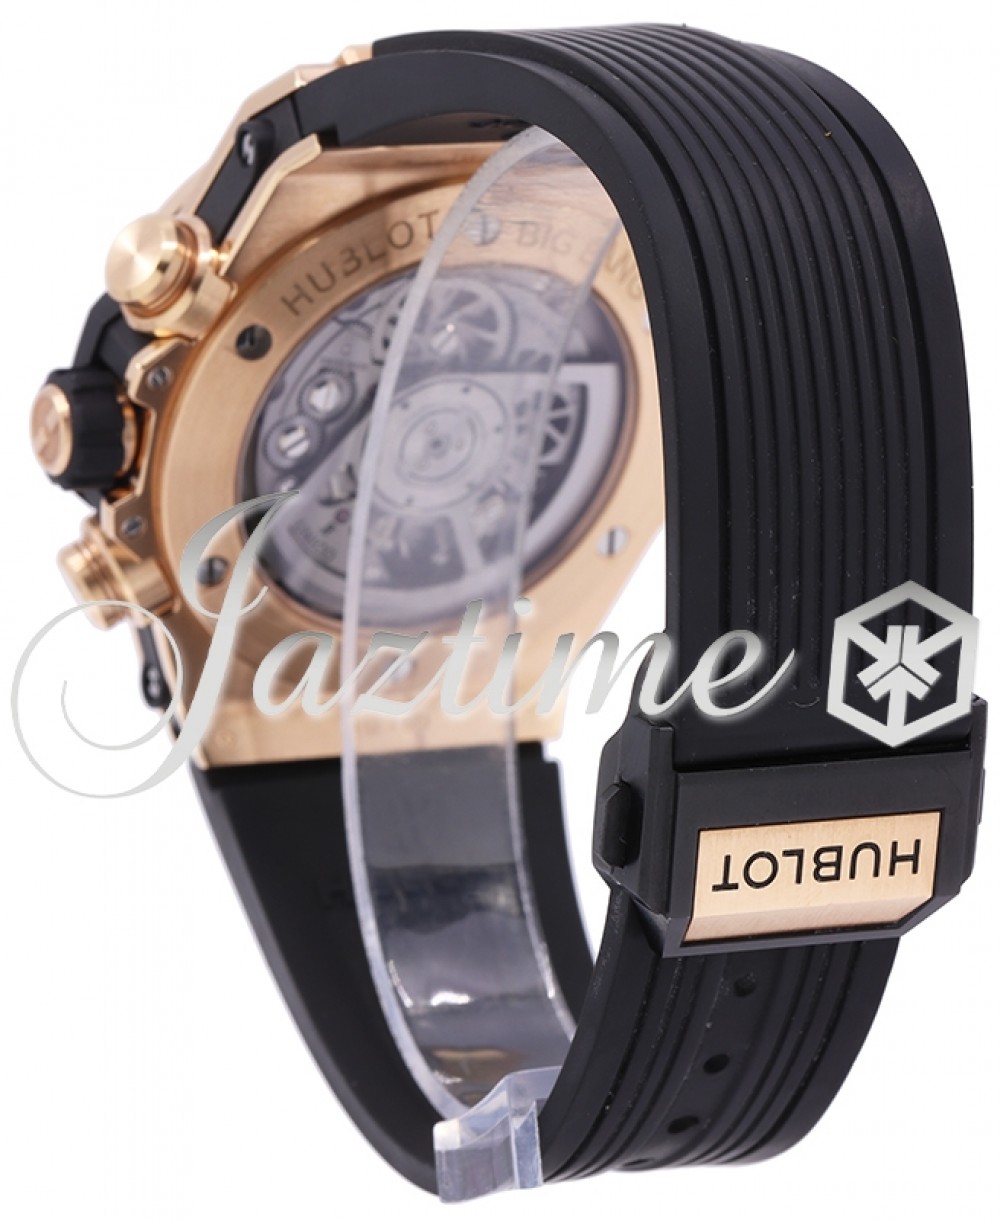 Hublot Big Bang Skeleton Dial 18kt Rose Gold Men's Watch 411OX1180RX  411.OX.1180.RX - Watches, Big Bang - Jomashop